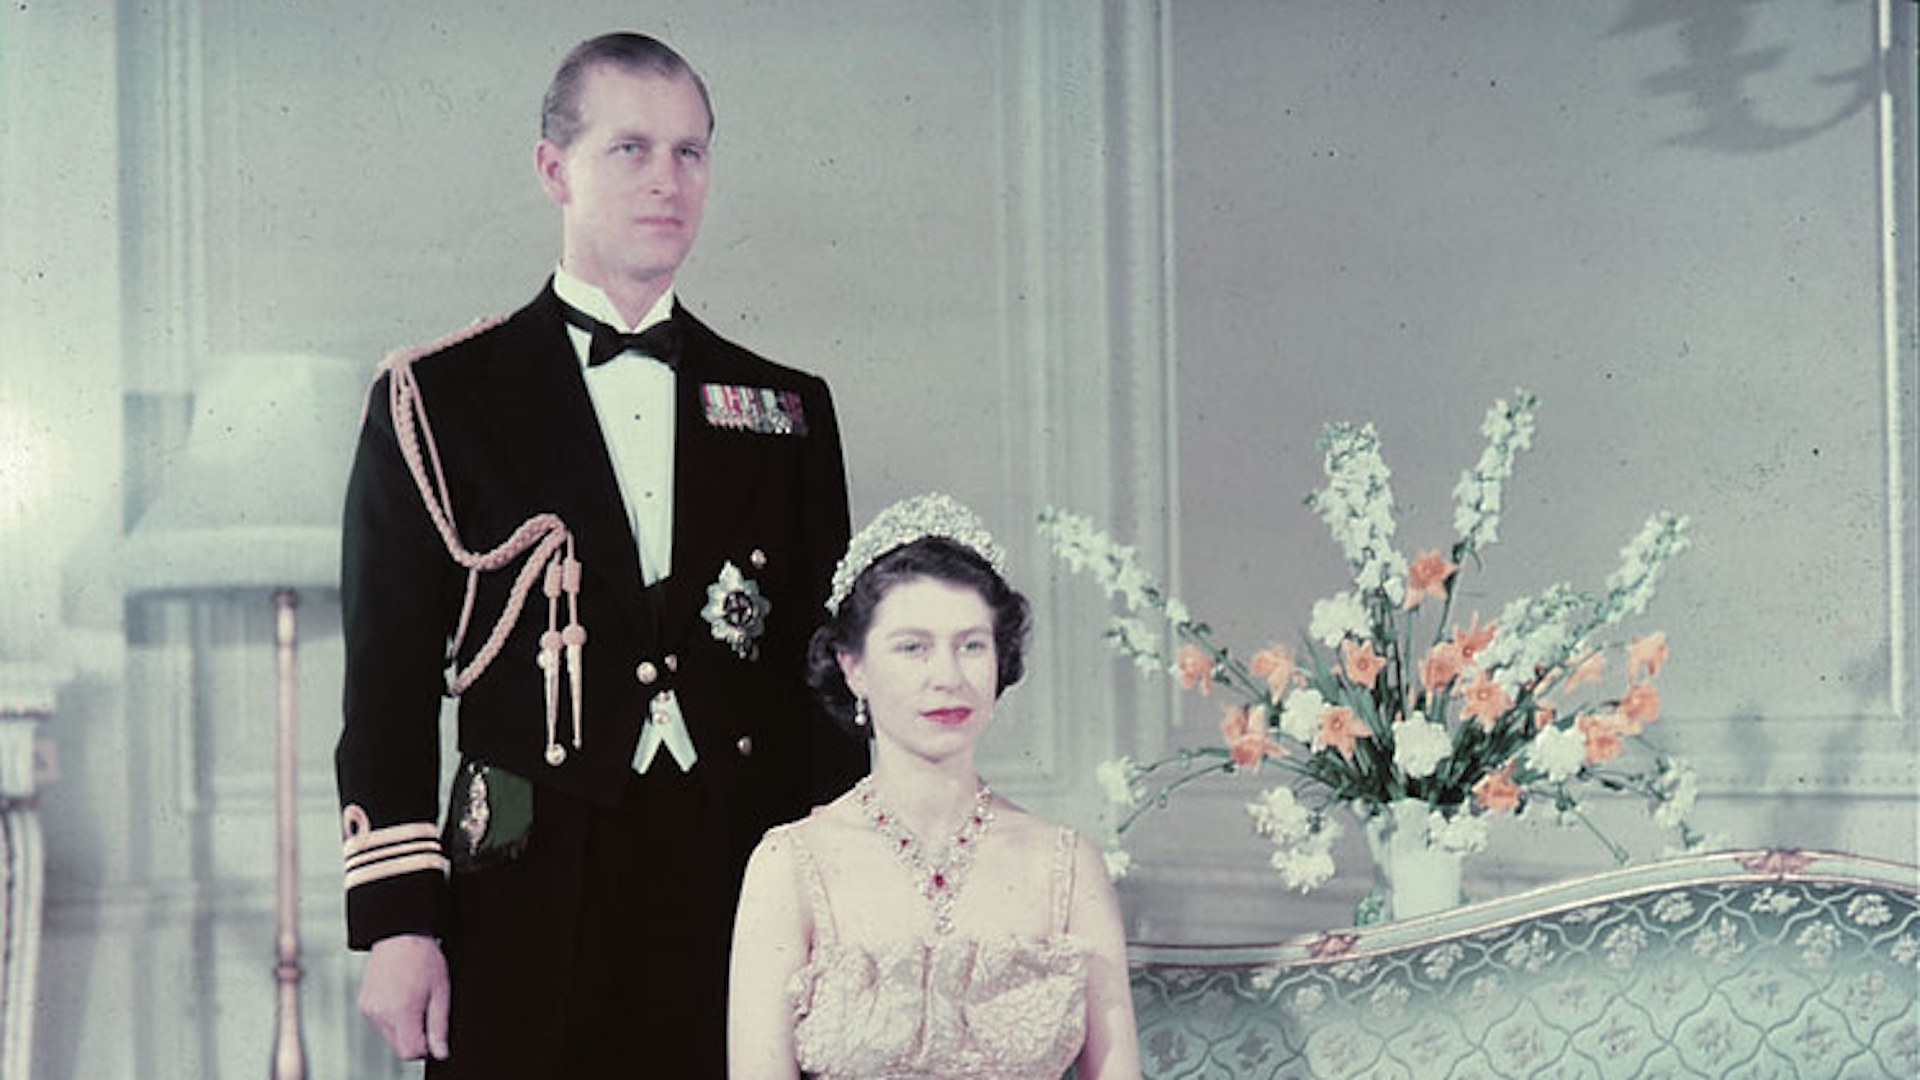 Prince Philip married then-Princess Elizabeth in 1947